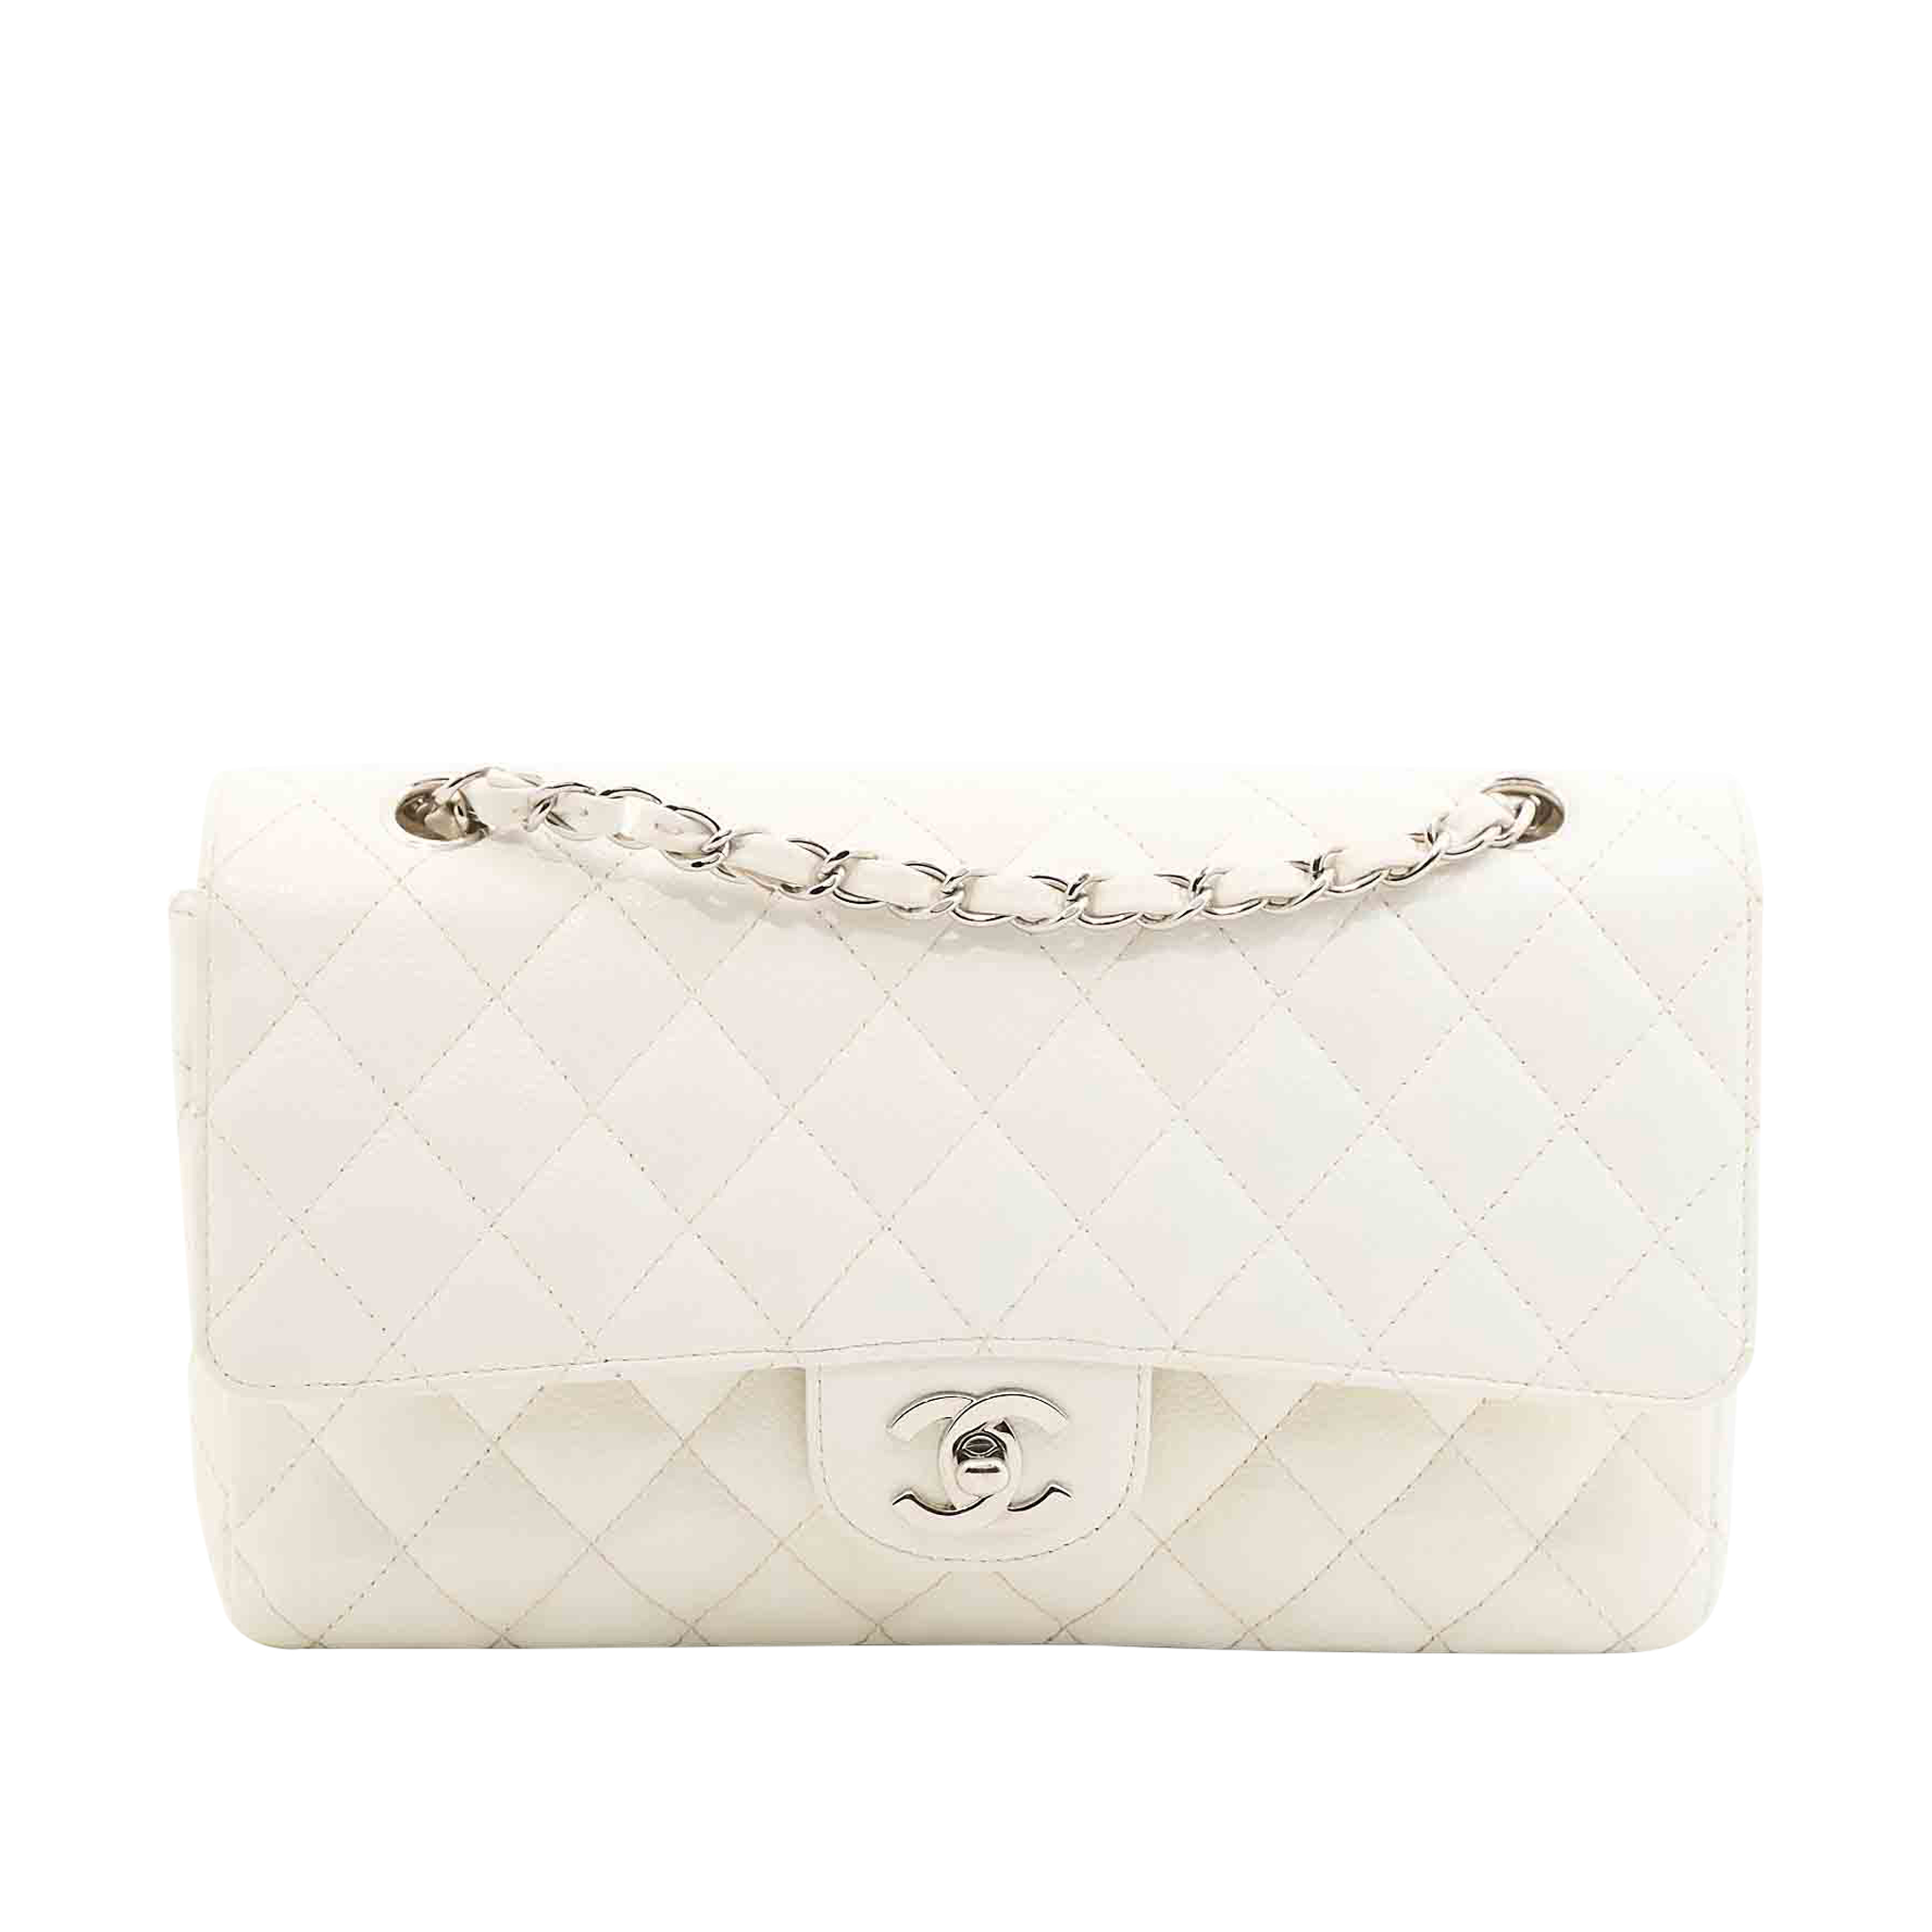 Chanel Classic Double Flap White Caviar Bag SHW